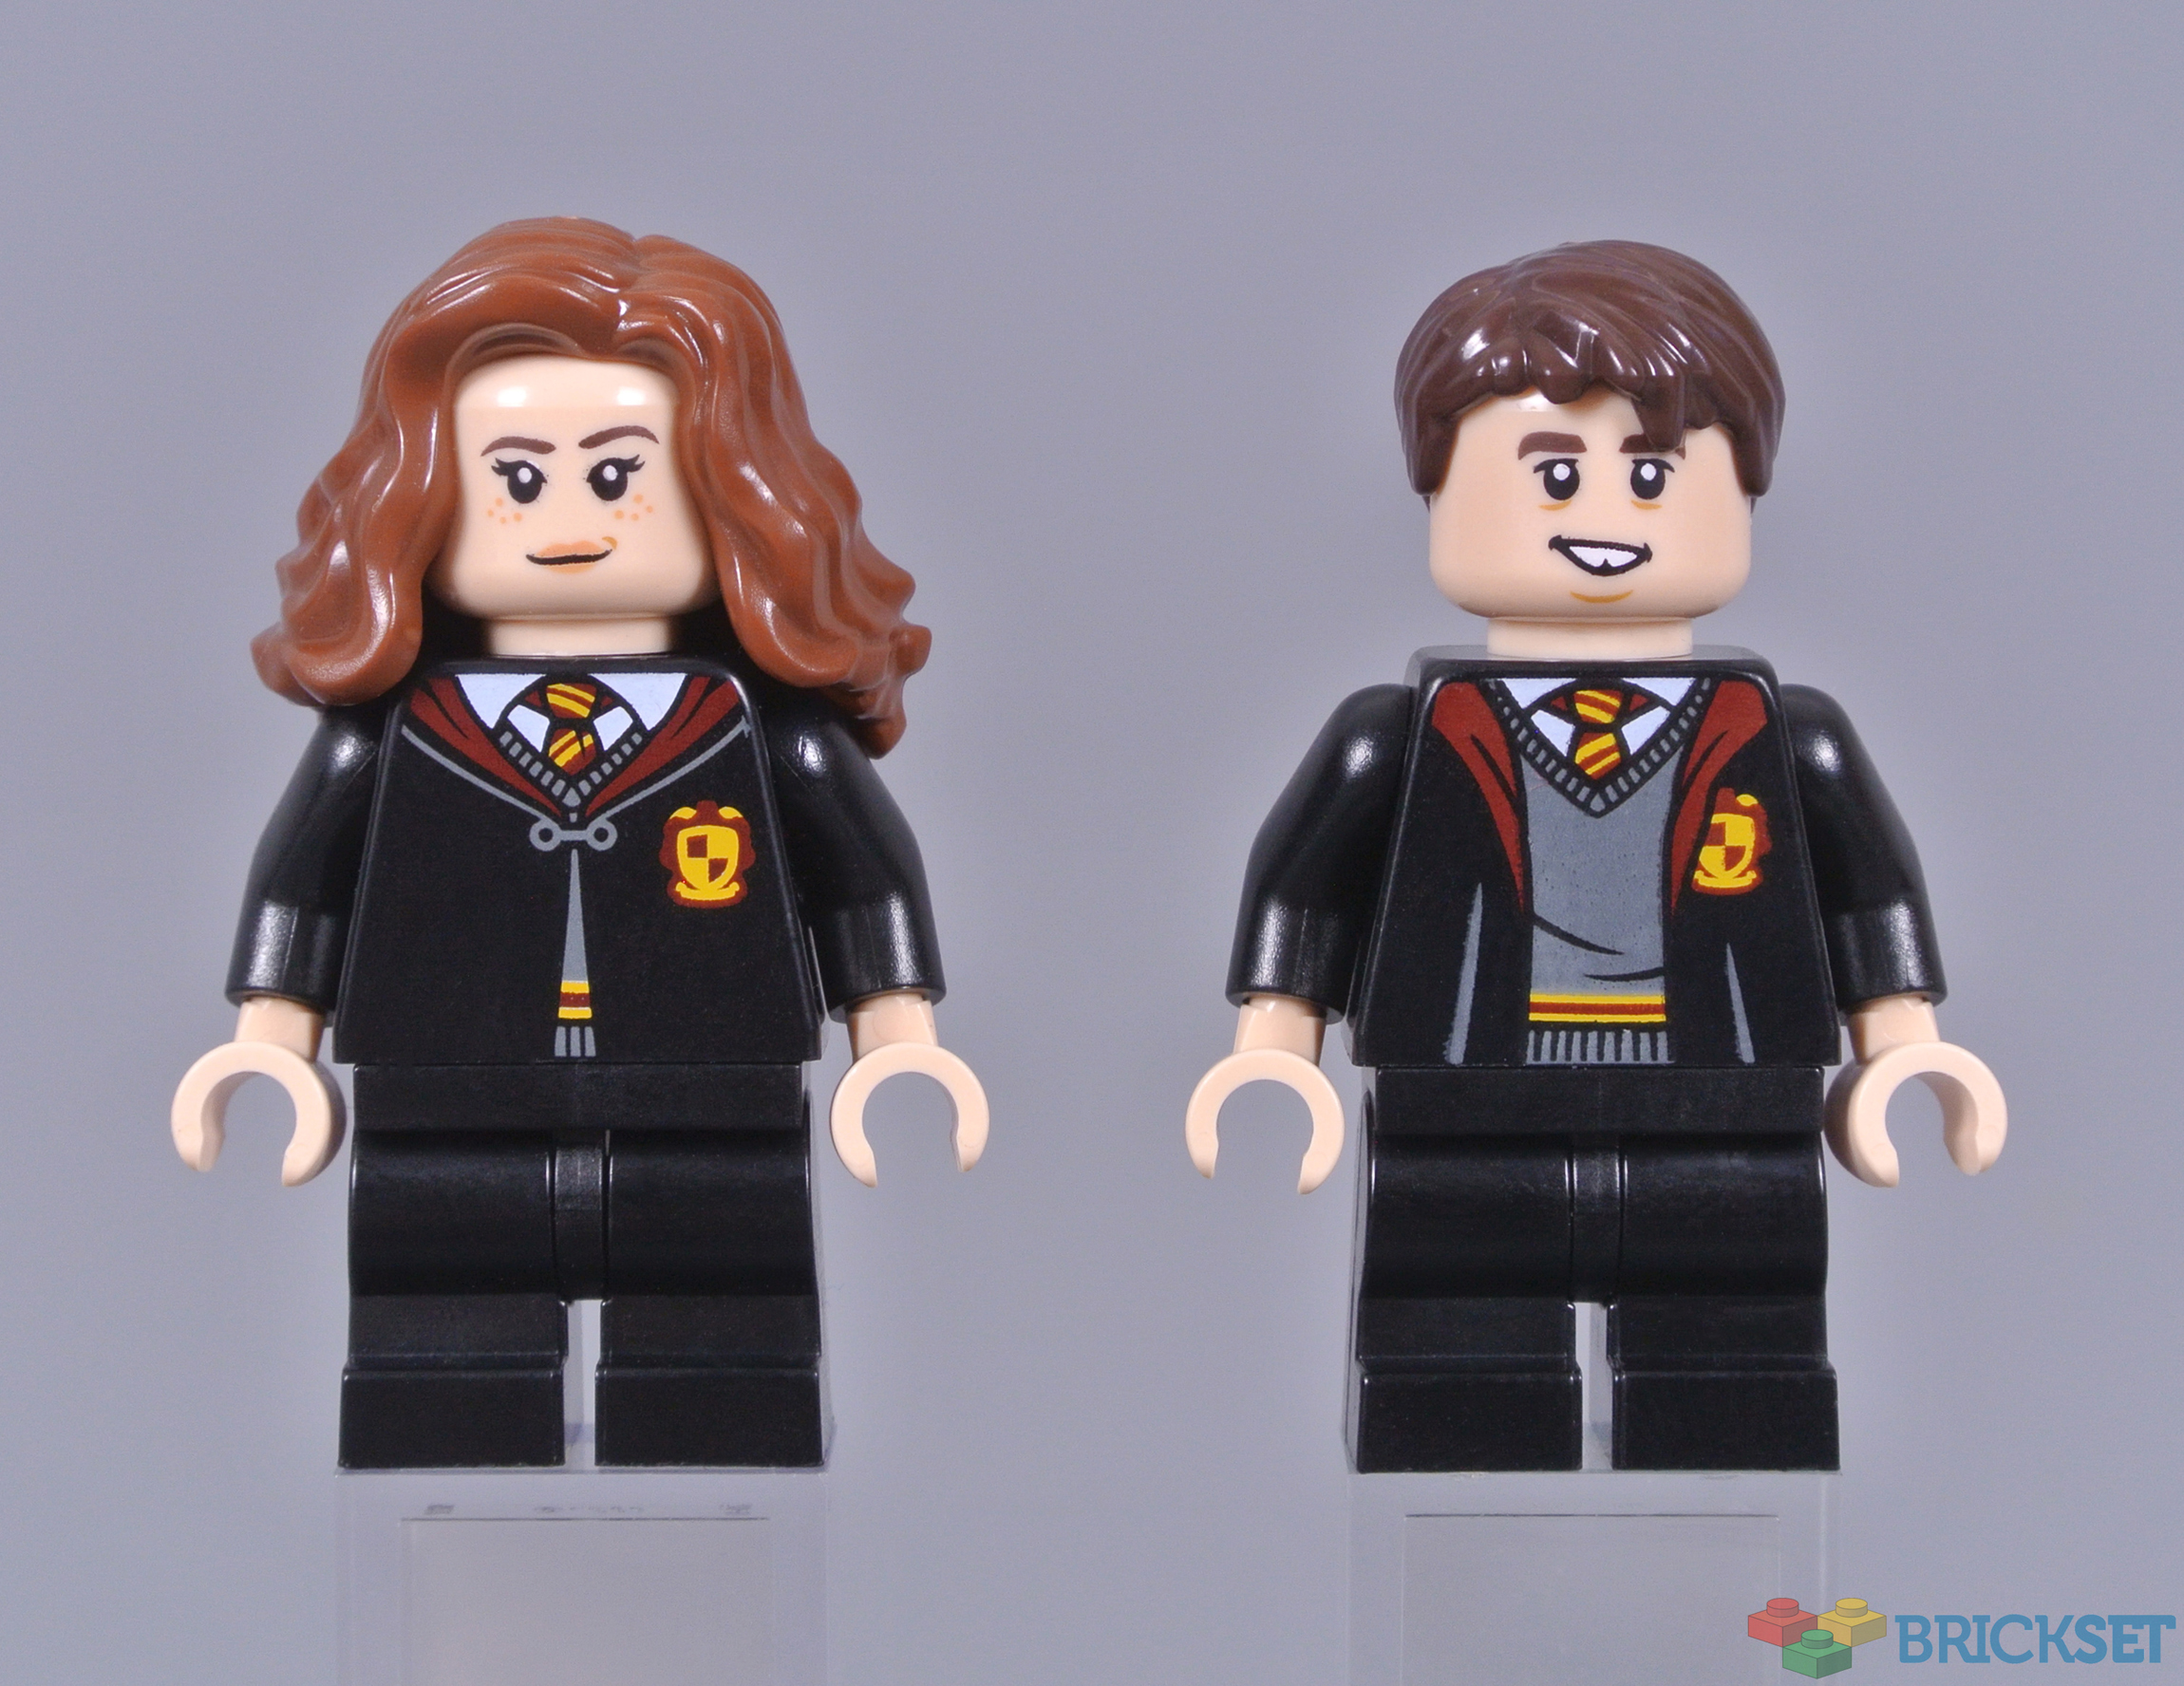 LEGO Harry Potter Hogwarts Moment: Defence Class 76397 (Retiring Soon)